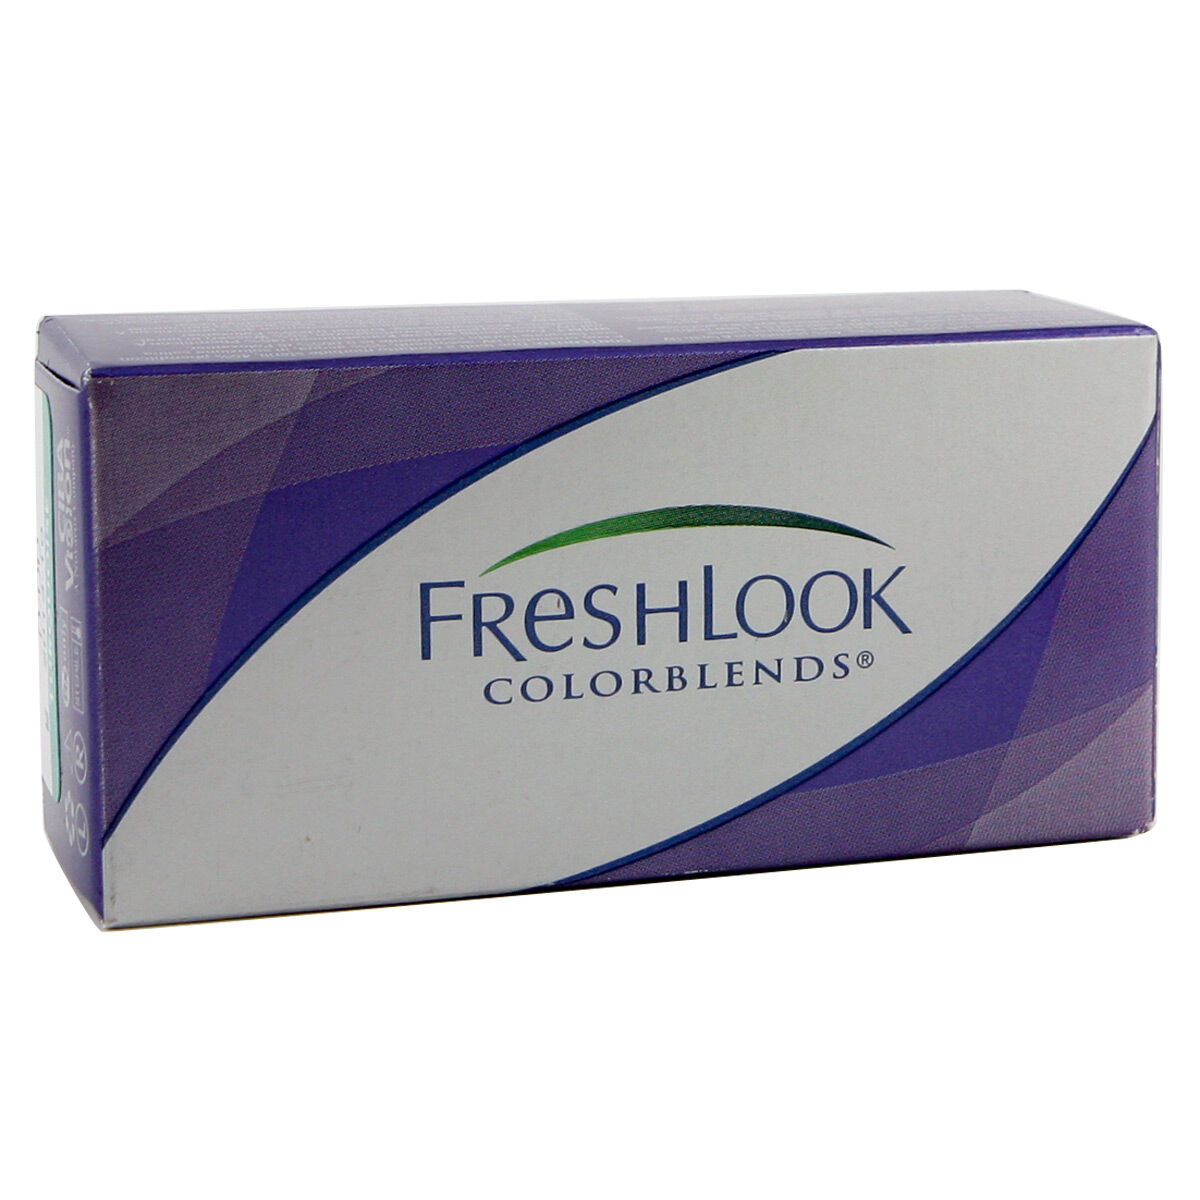 Alcon Freshlook Colorblends (2 Contact Lenses), Brilliant Blue, Ciba Vision/Alcon, Monthly Coloured Lenses, Phemfilcon A